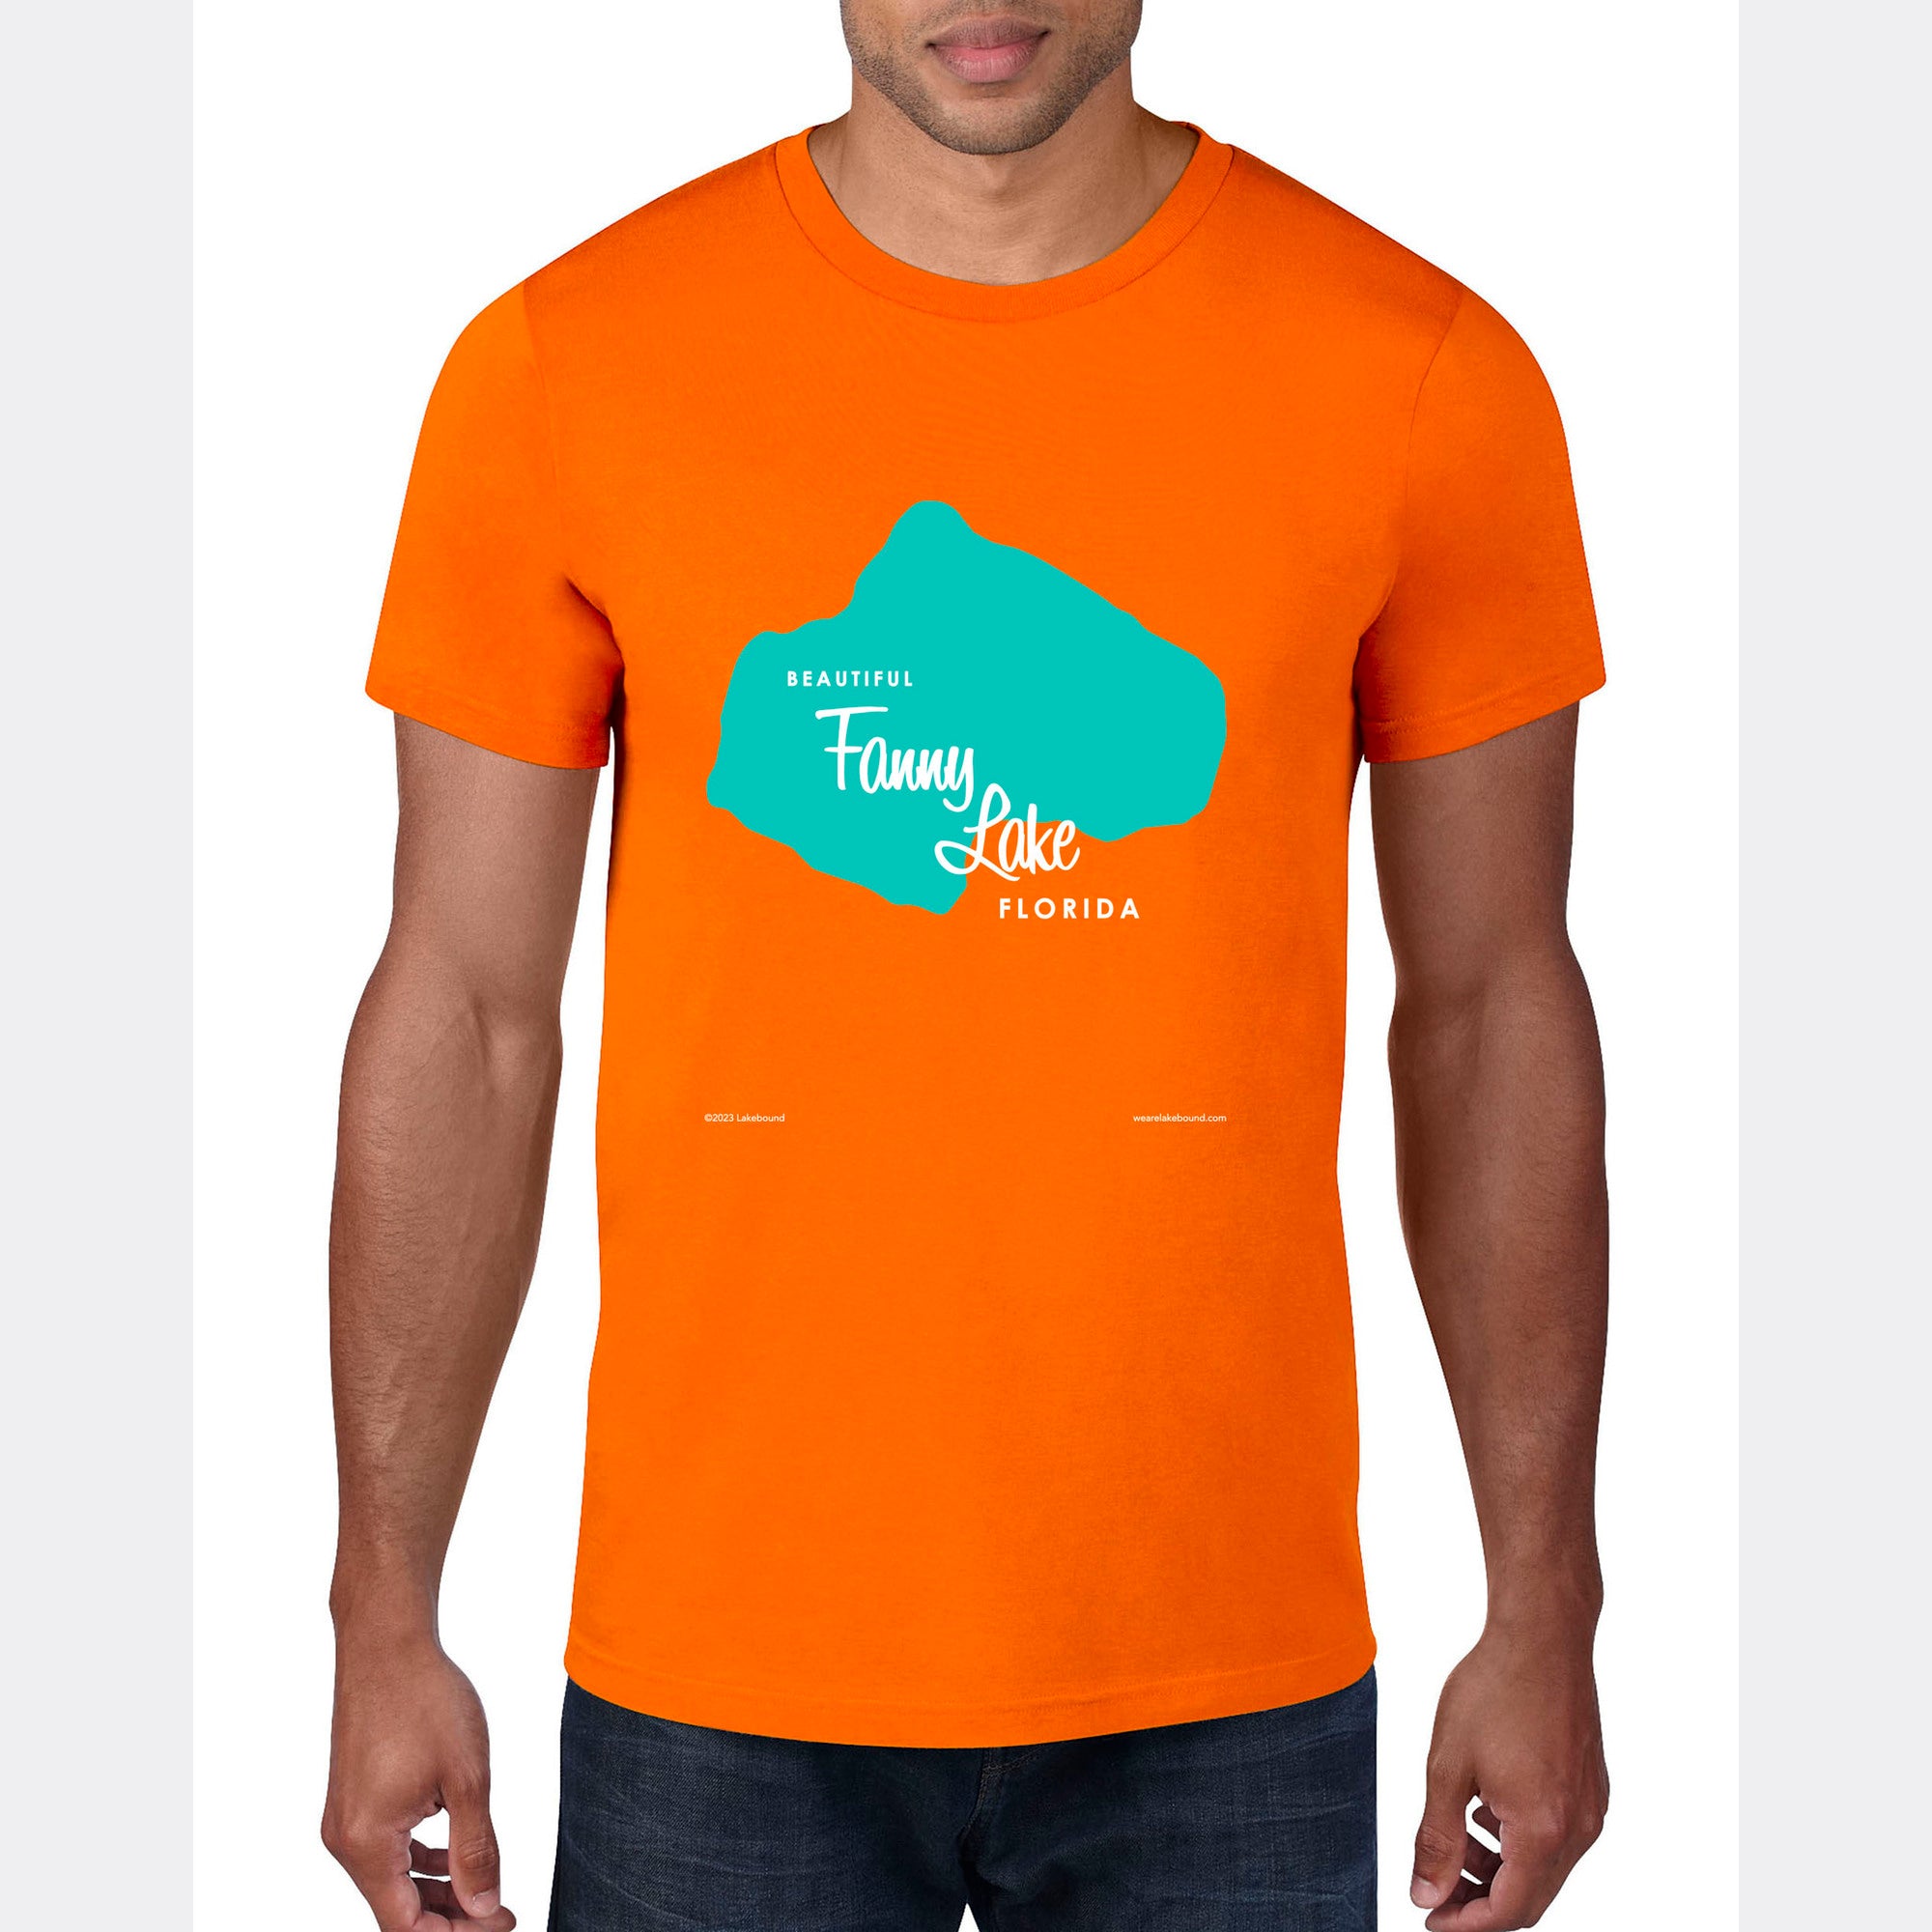 Lake Fanny Florida, T-Shirt